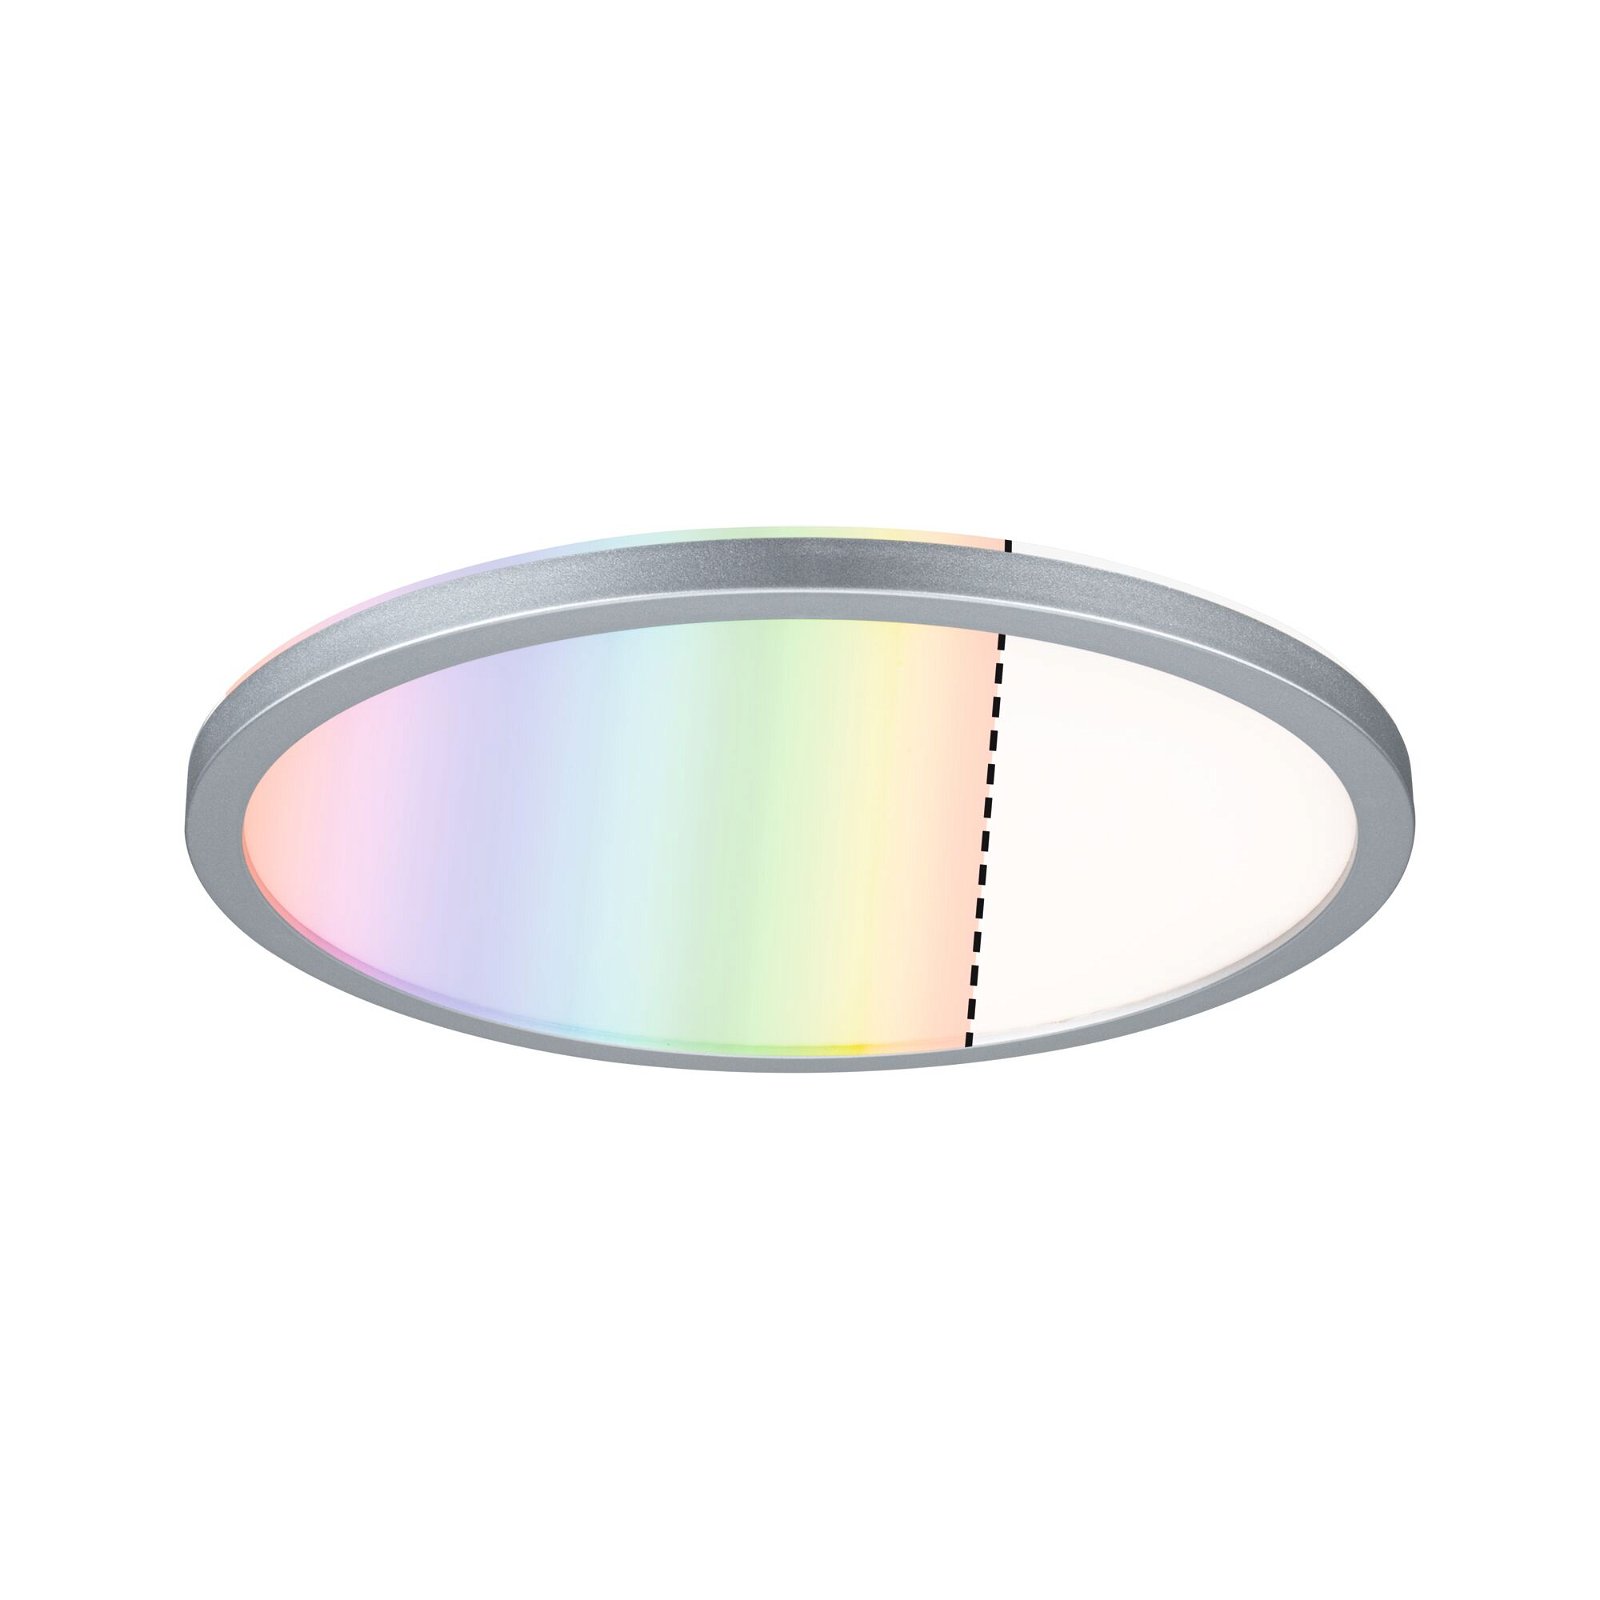 LED Panel Atria Shine Backlight round 293mm 12W 1400lm RGBW Chrome matt dimmable